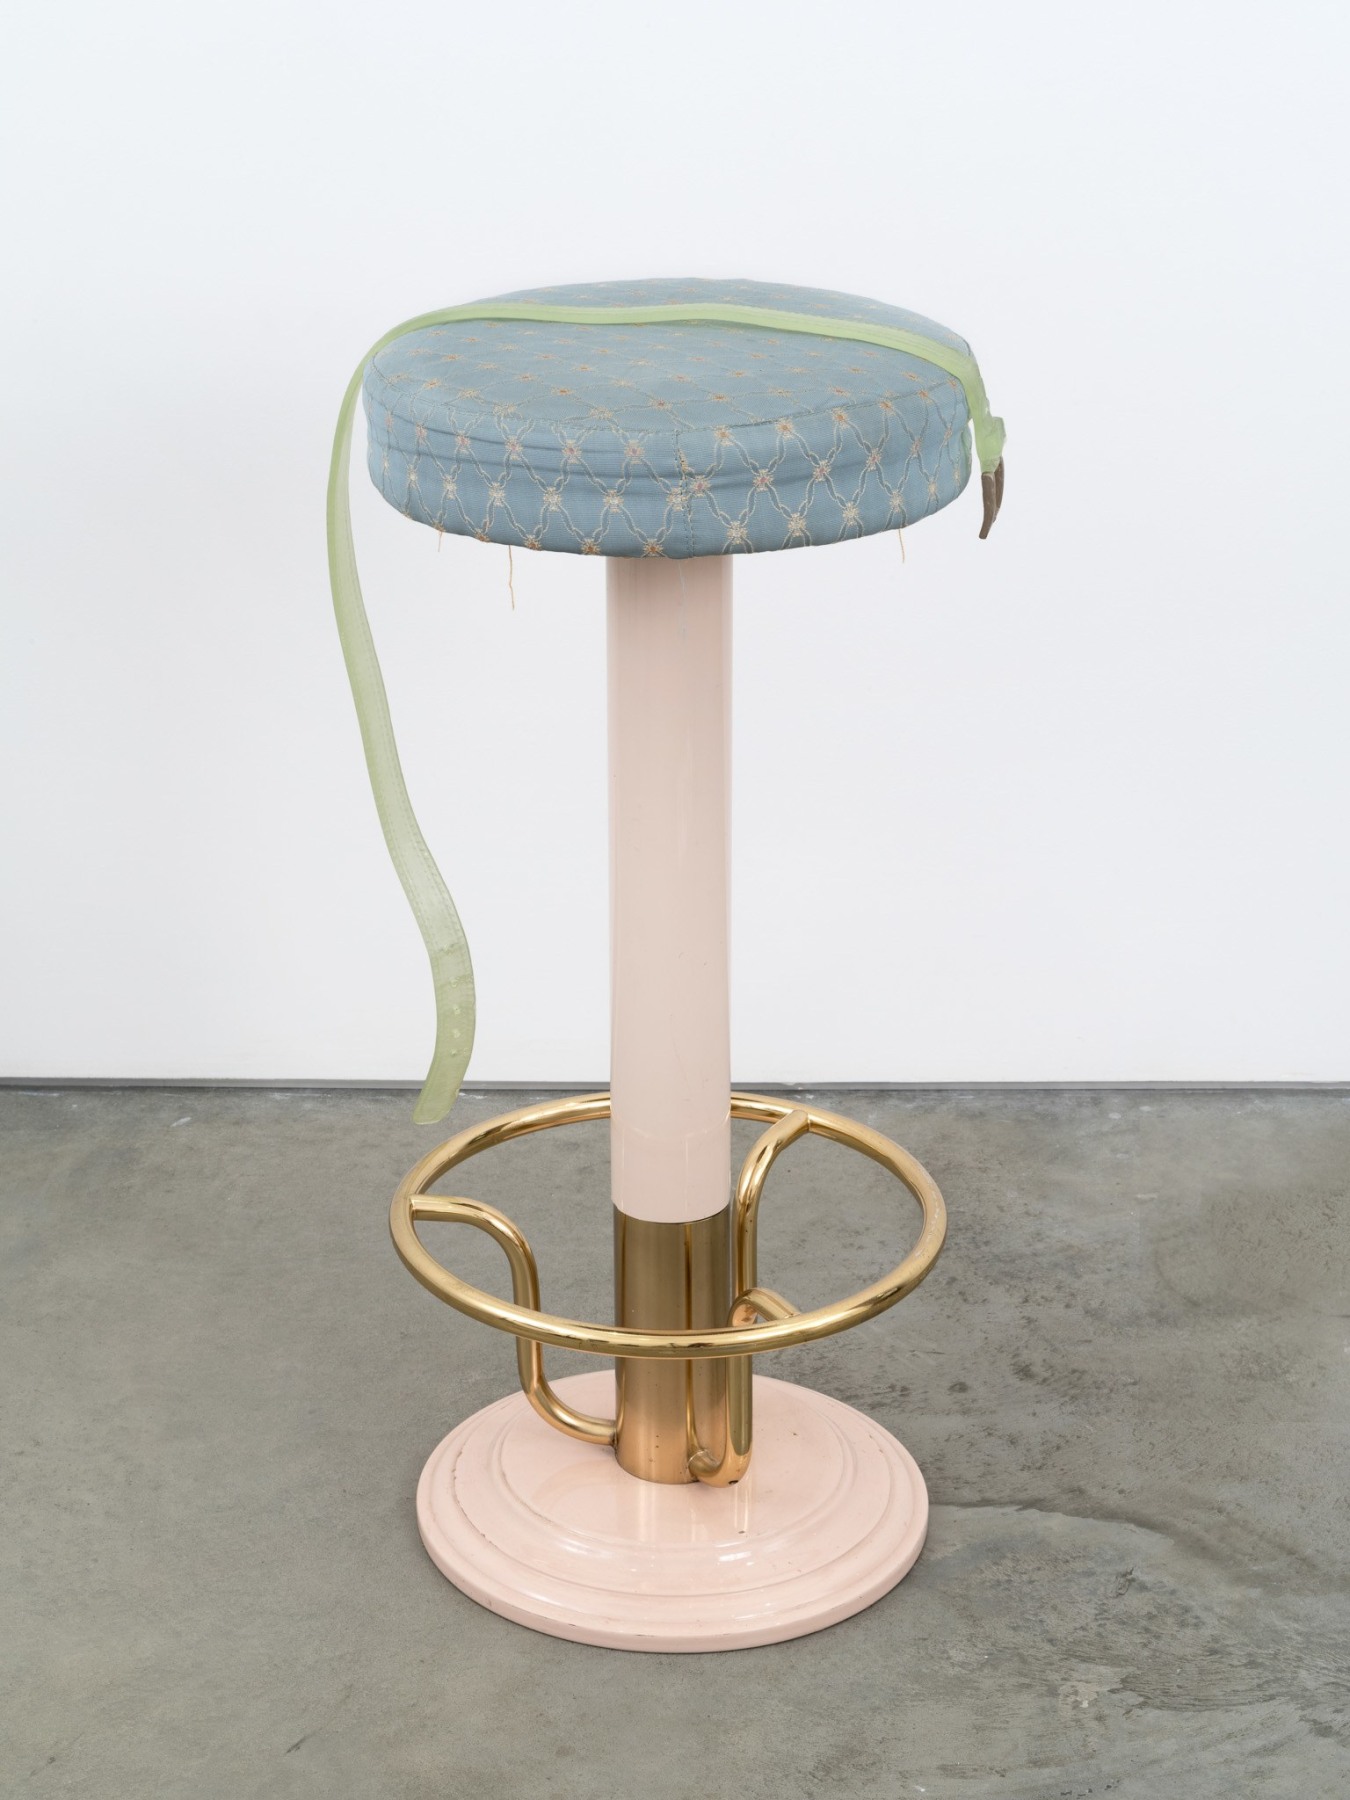 ￼￼Valentin Carron, Belt on bar stool, 2014